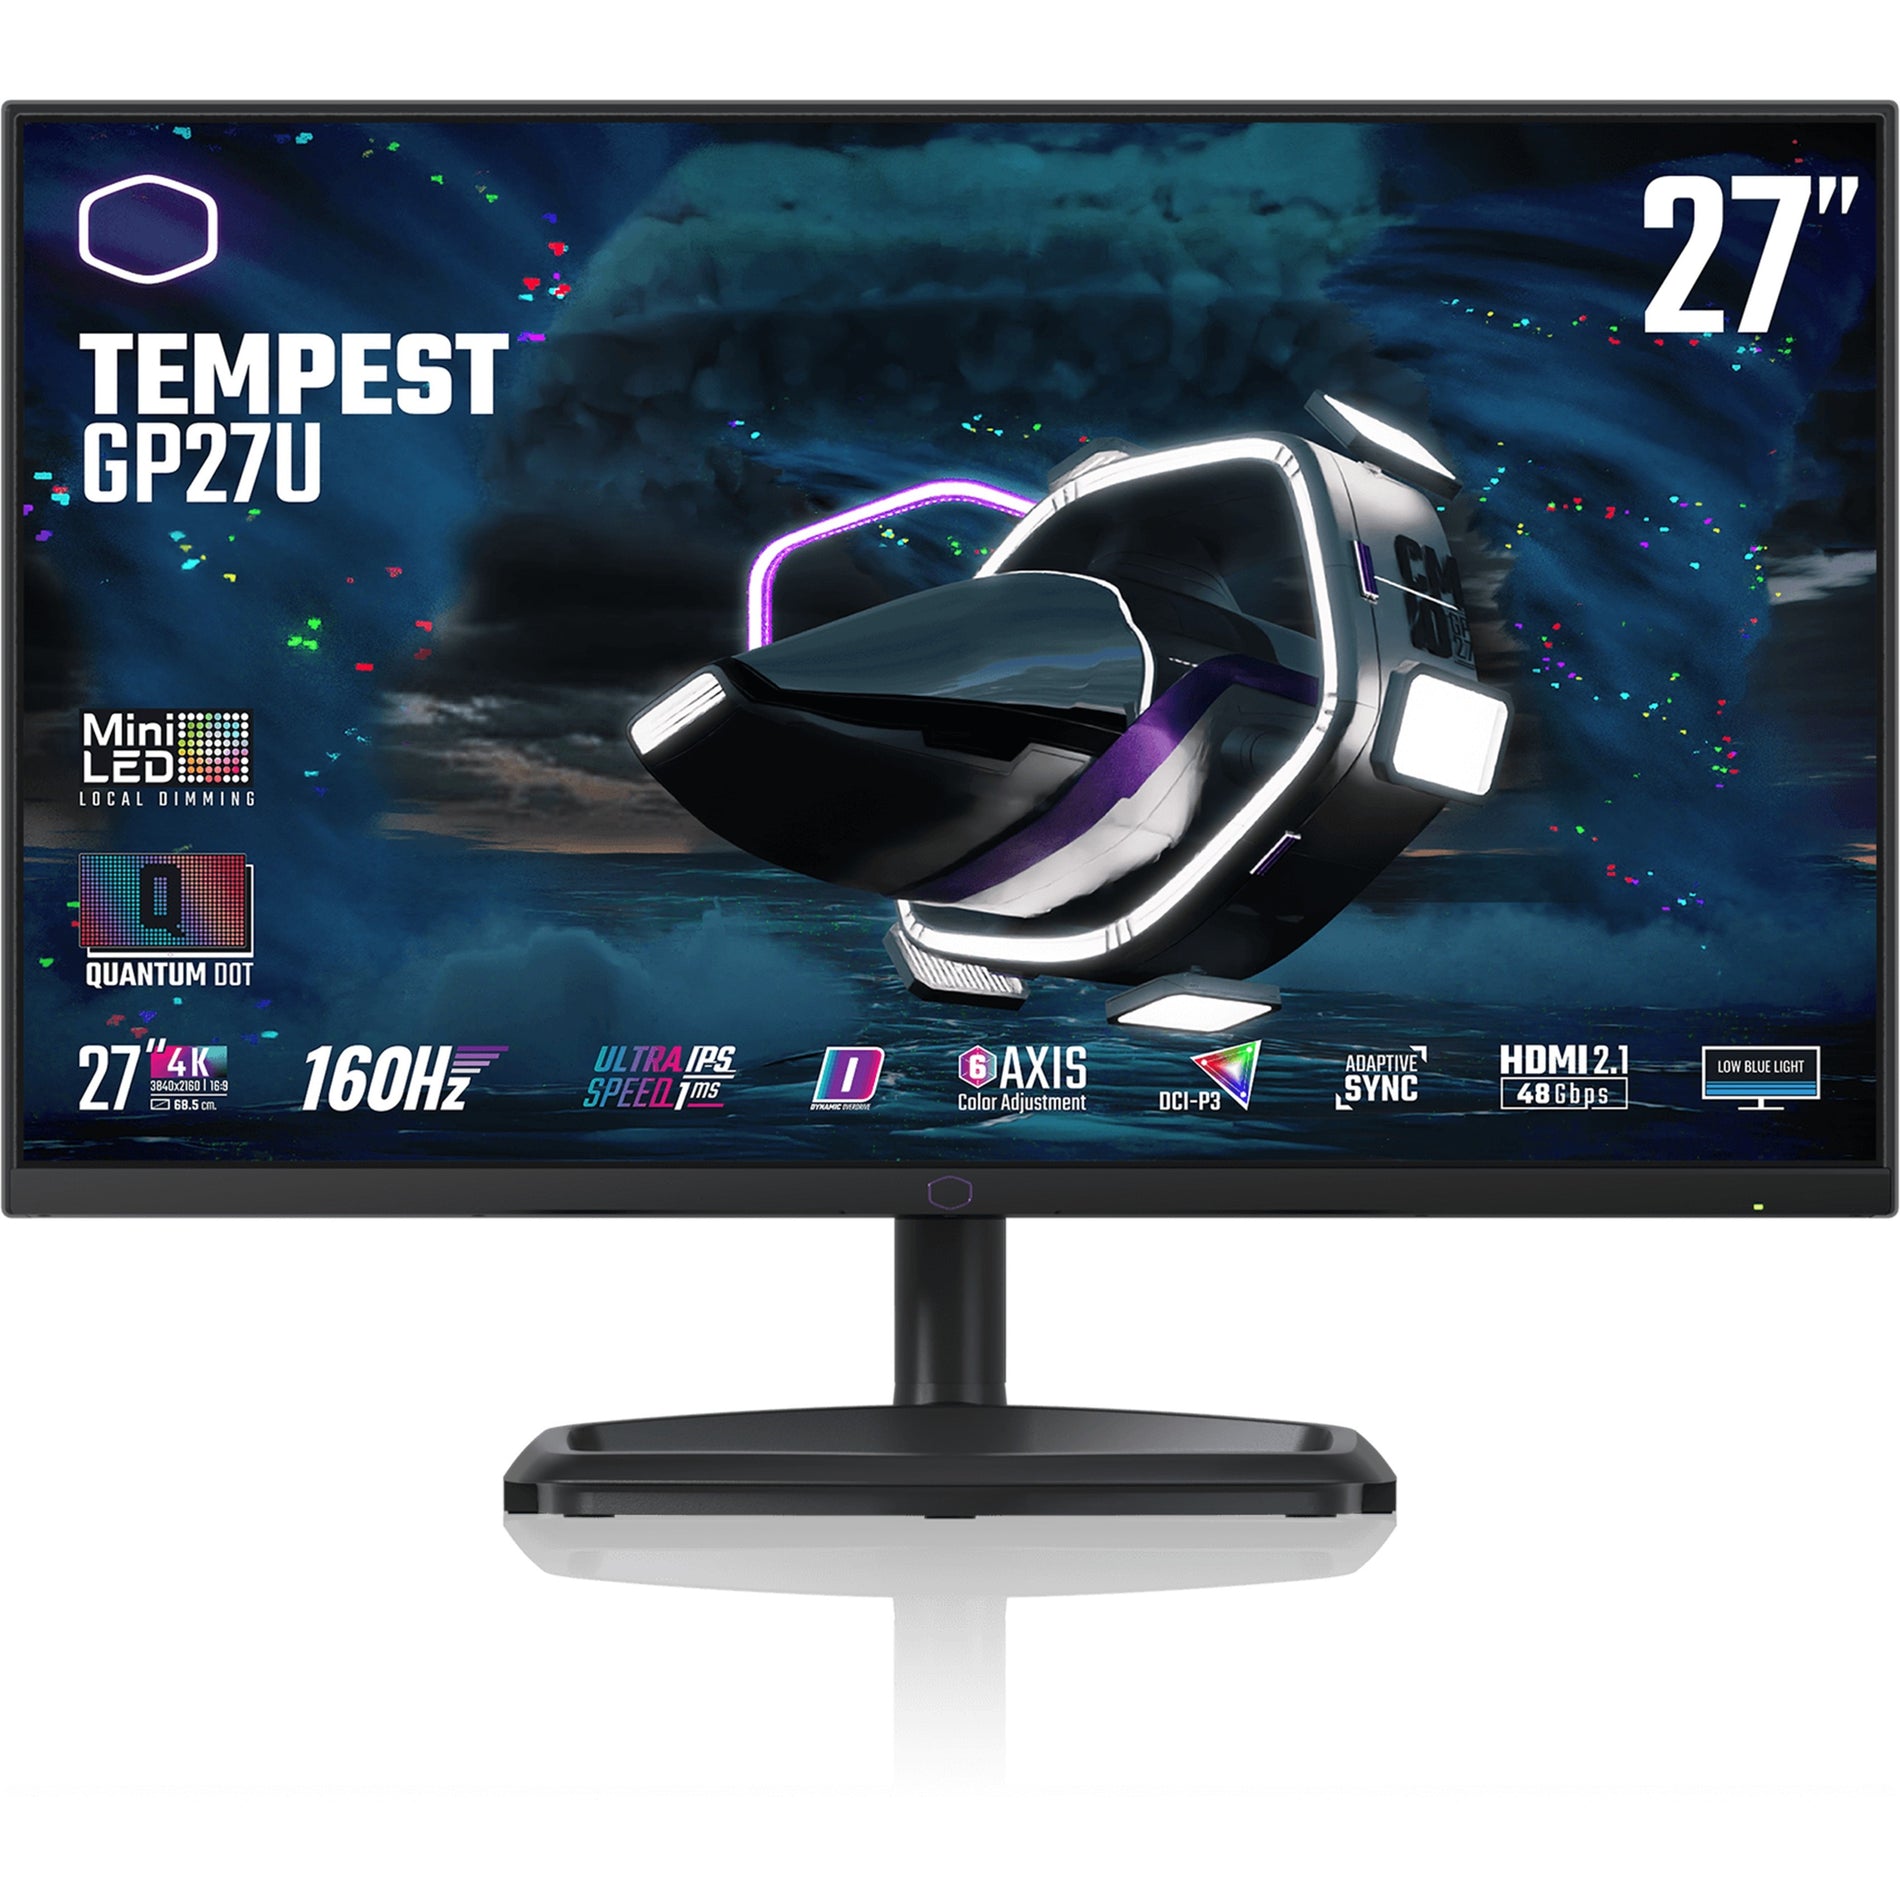 Cooler Master CMI-GP27-FUS-US Tempest GP27-FUS Widescreen Gaming LCD Monitor, 4K UHD, Quantum Mini LED, 27", FreeSync/G-Sync, 160Hz, HDR, USB Hub, KVM Switch